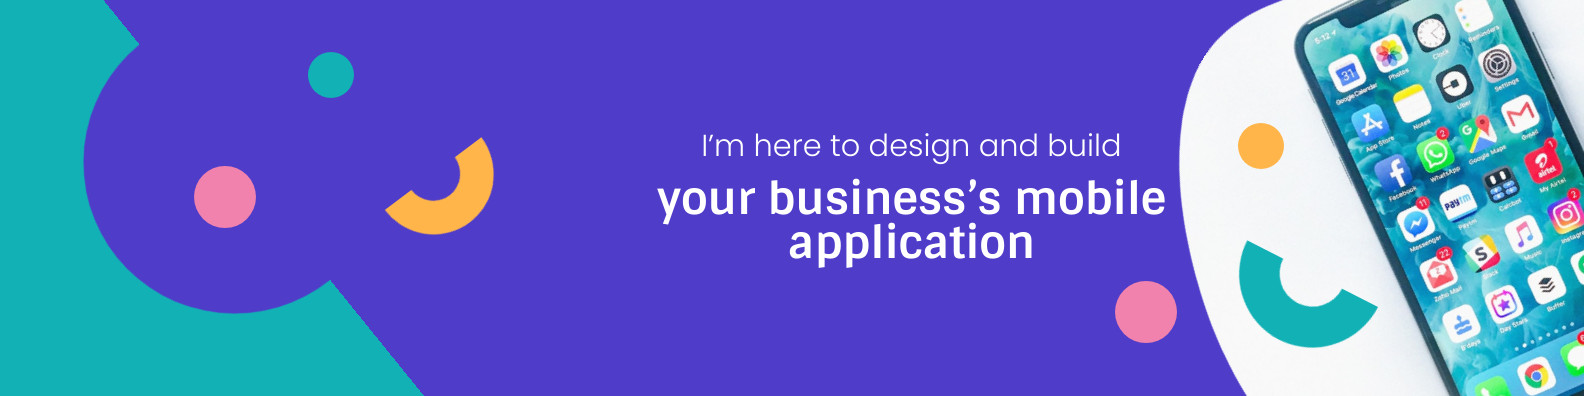 Business Mobile App Designer Linkedin Profile BG